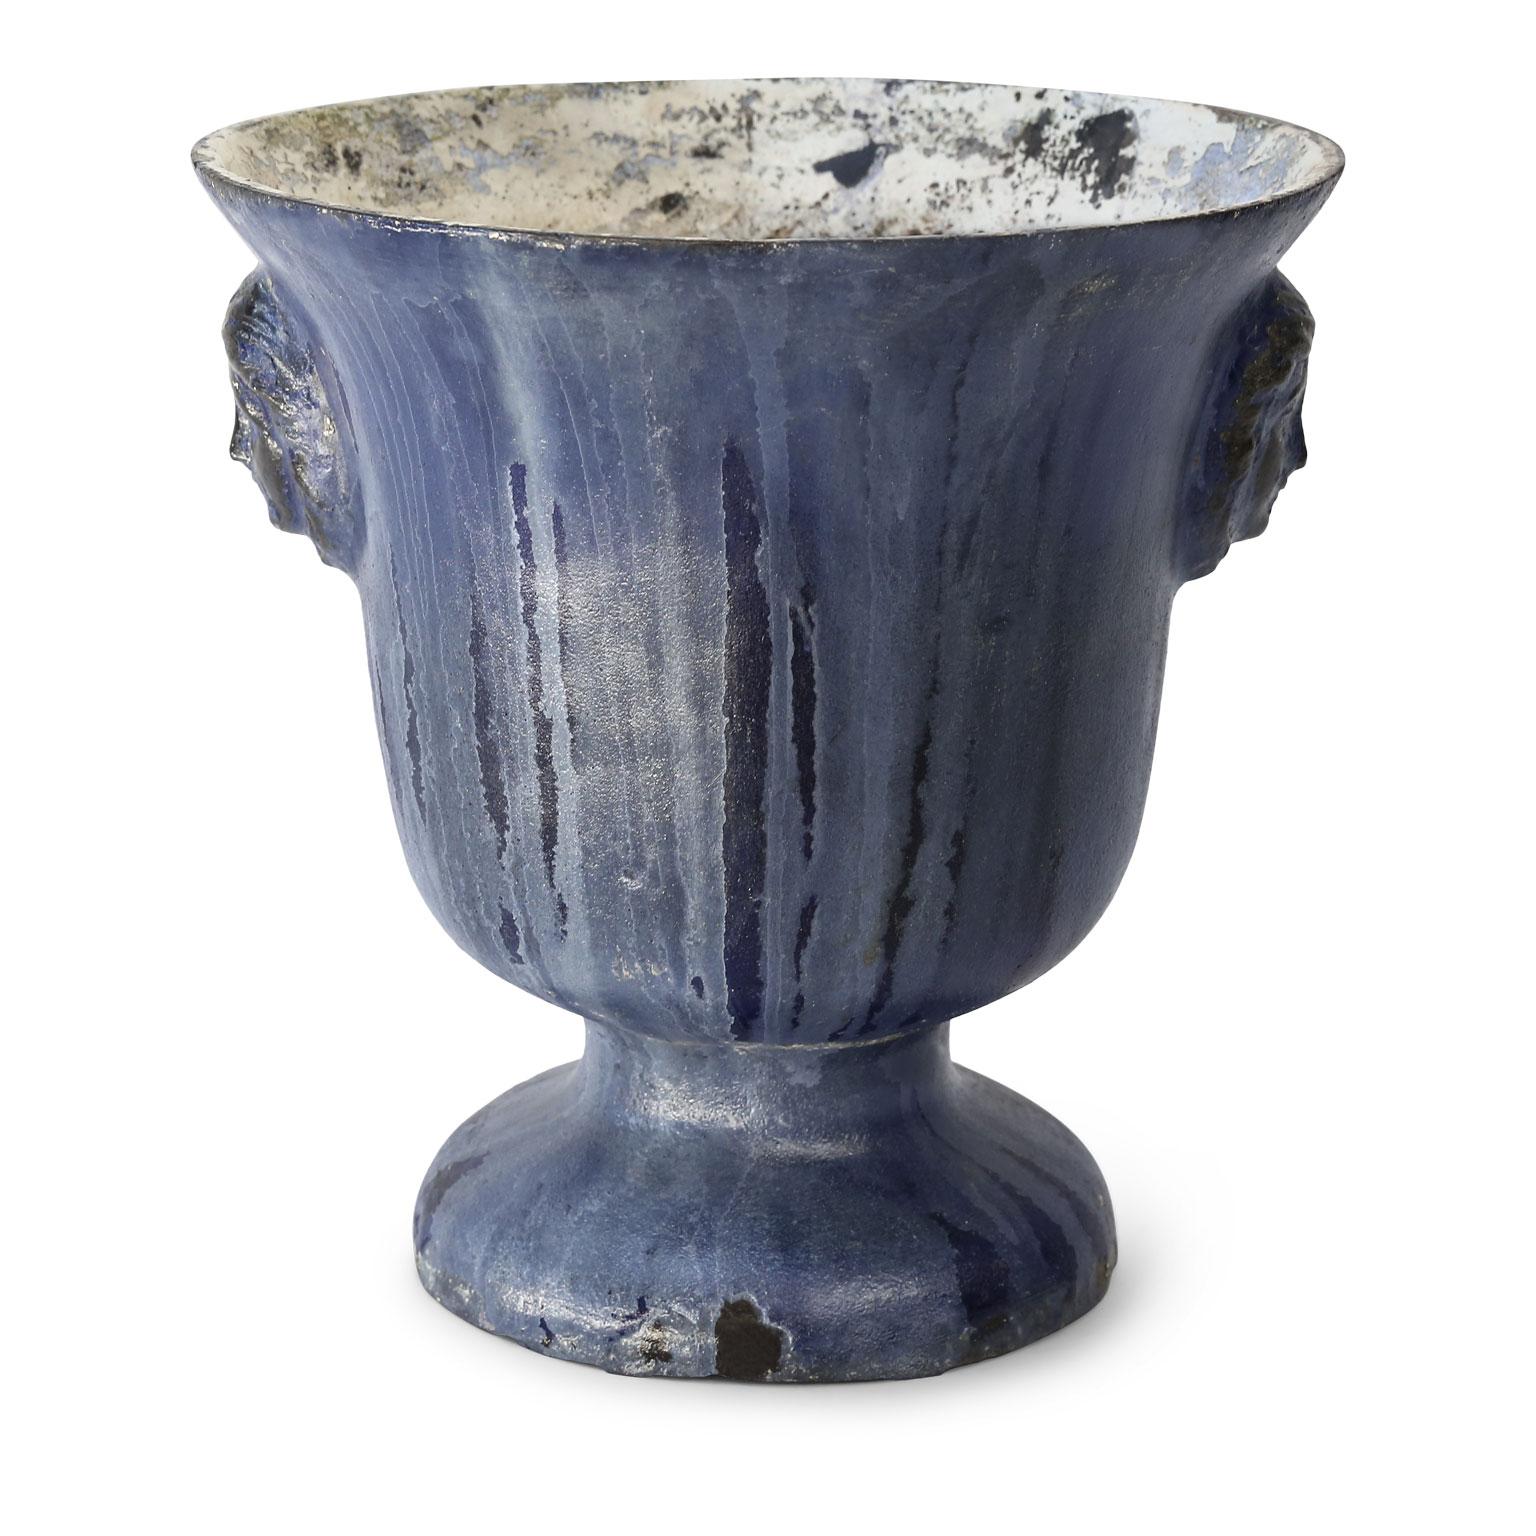 Cast iron enameled Rouen urn with blue enamel finish and distressed patina.